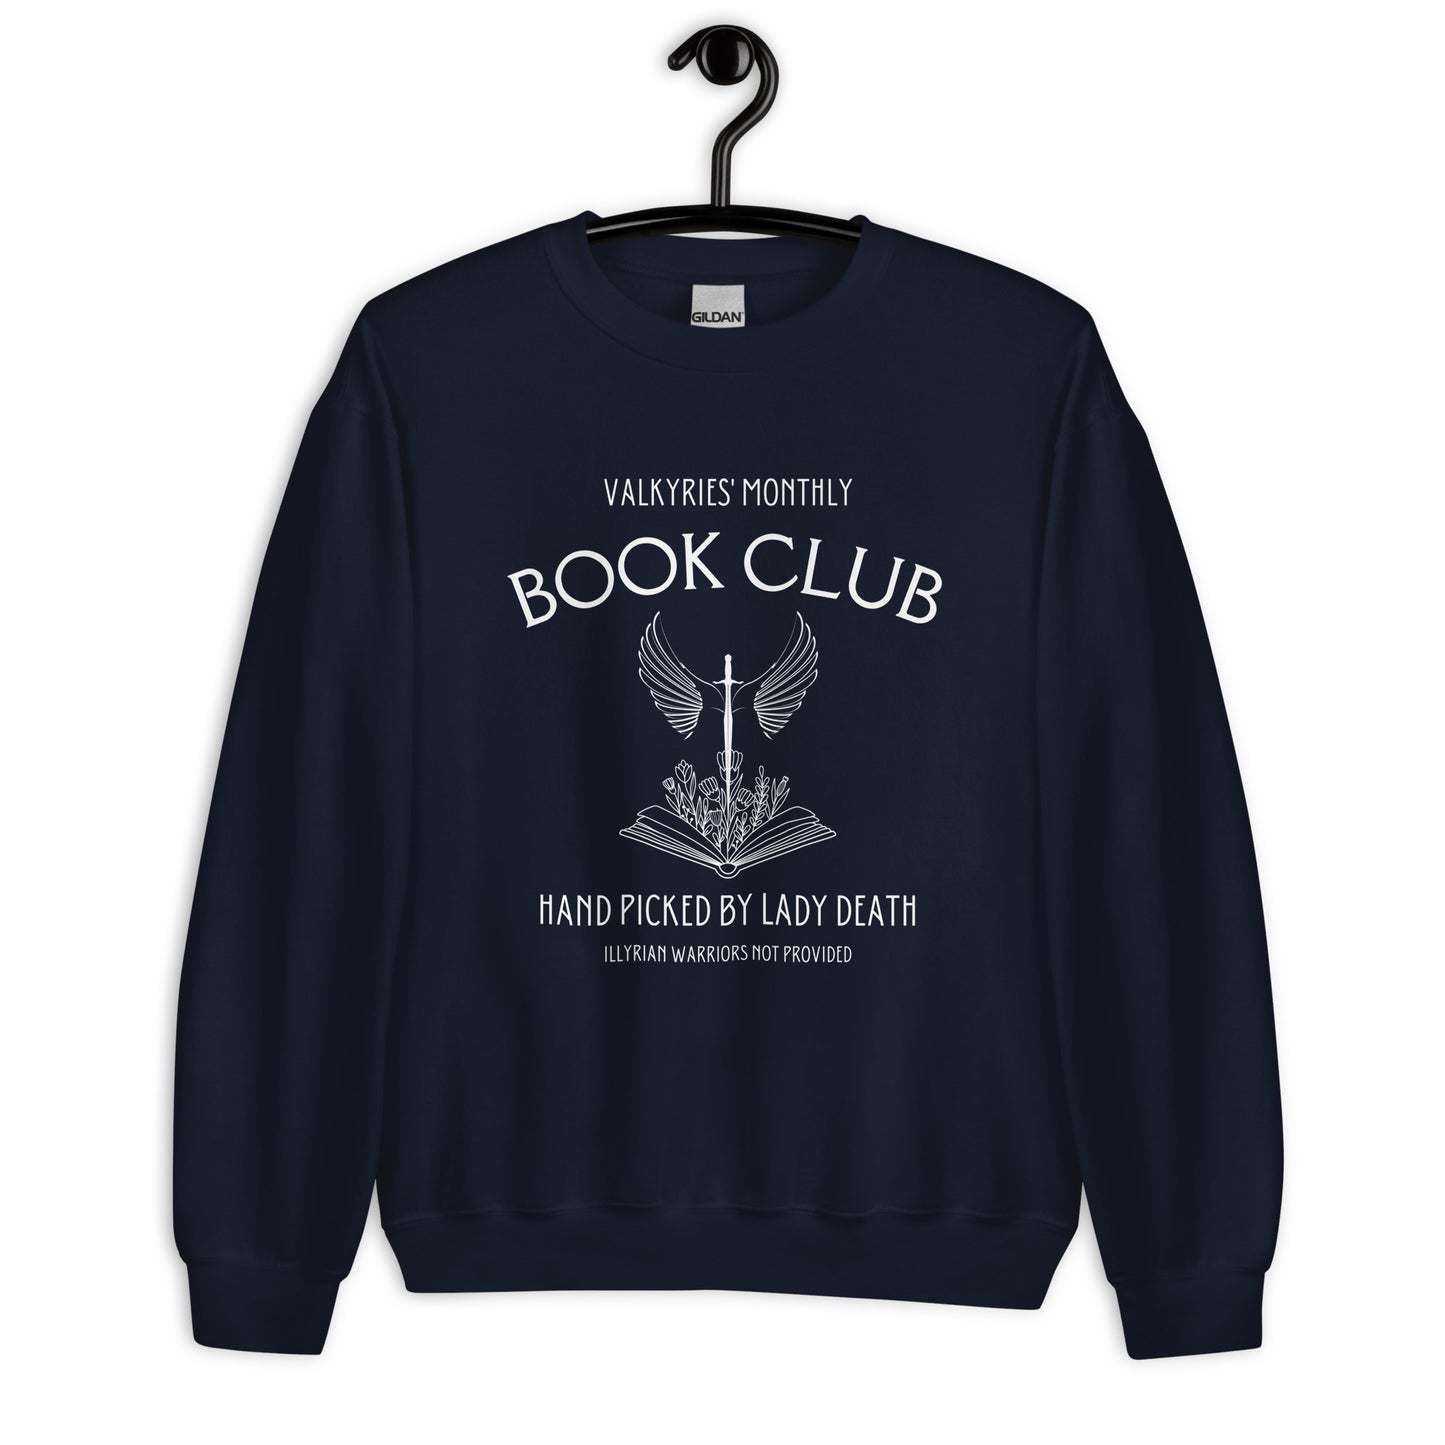 Valkyries' Monthly Book Club Sweatshirt